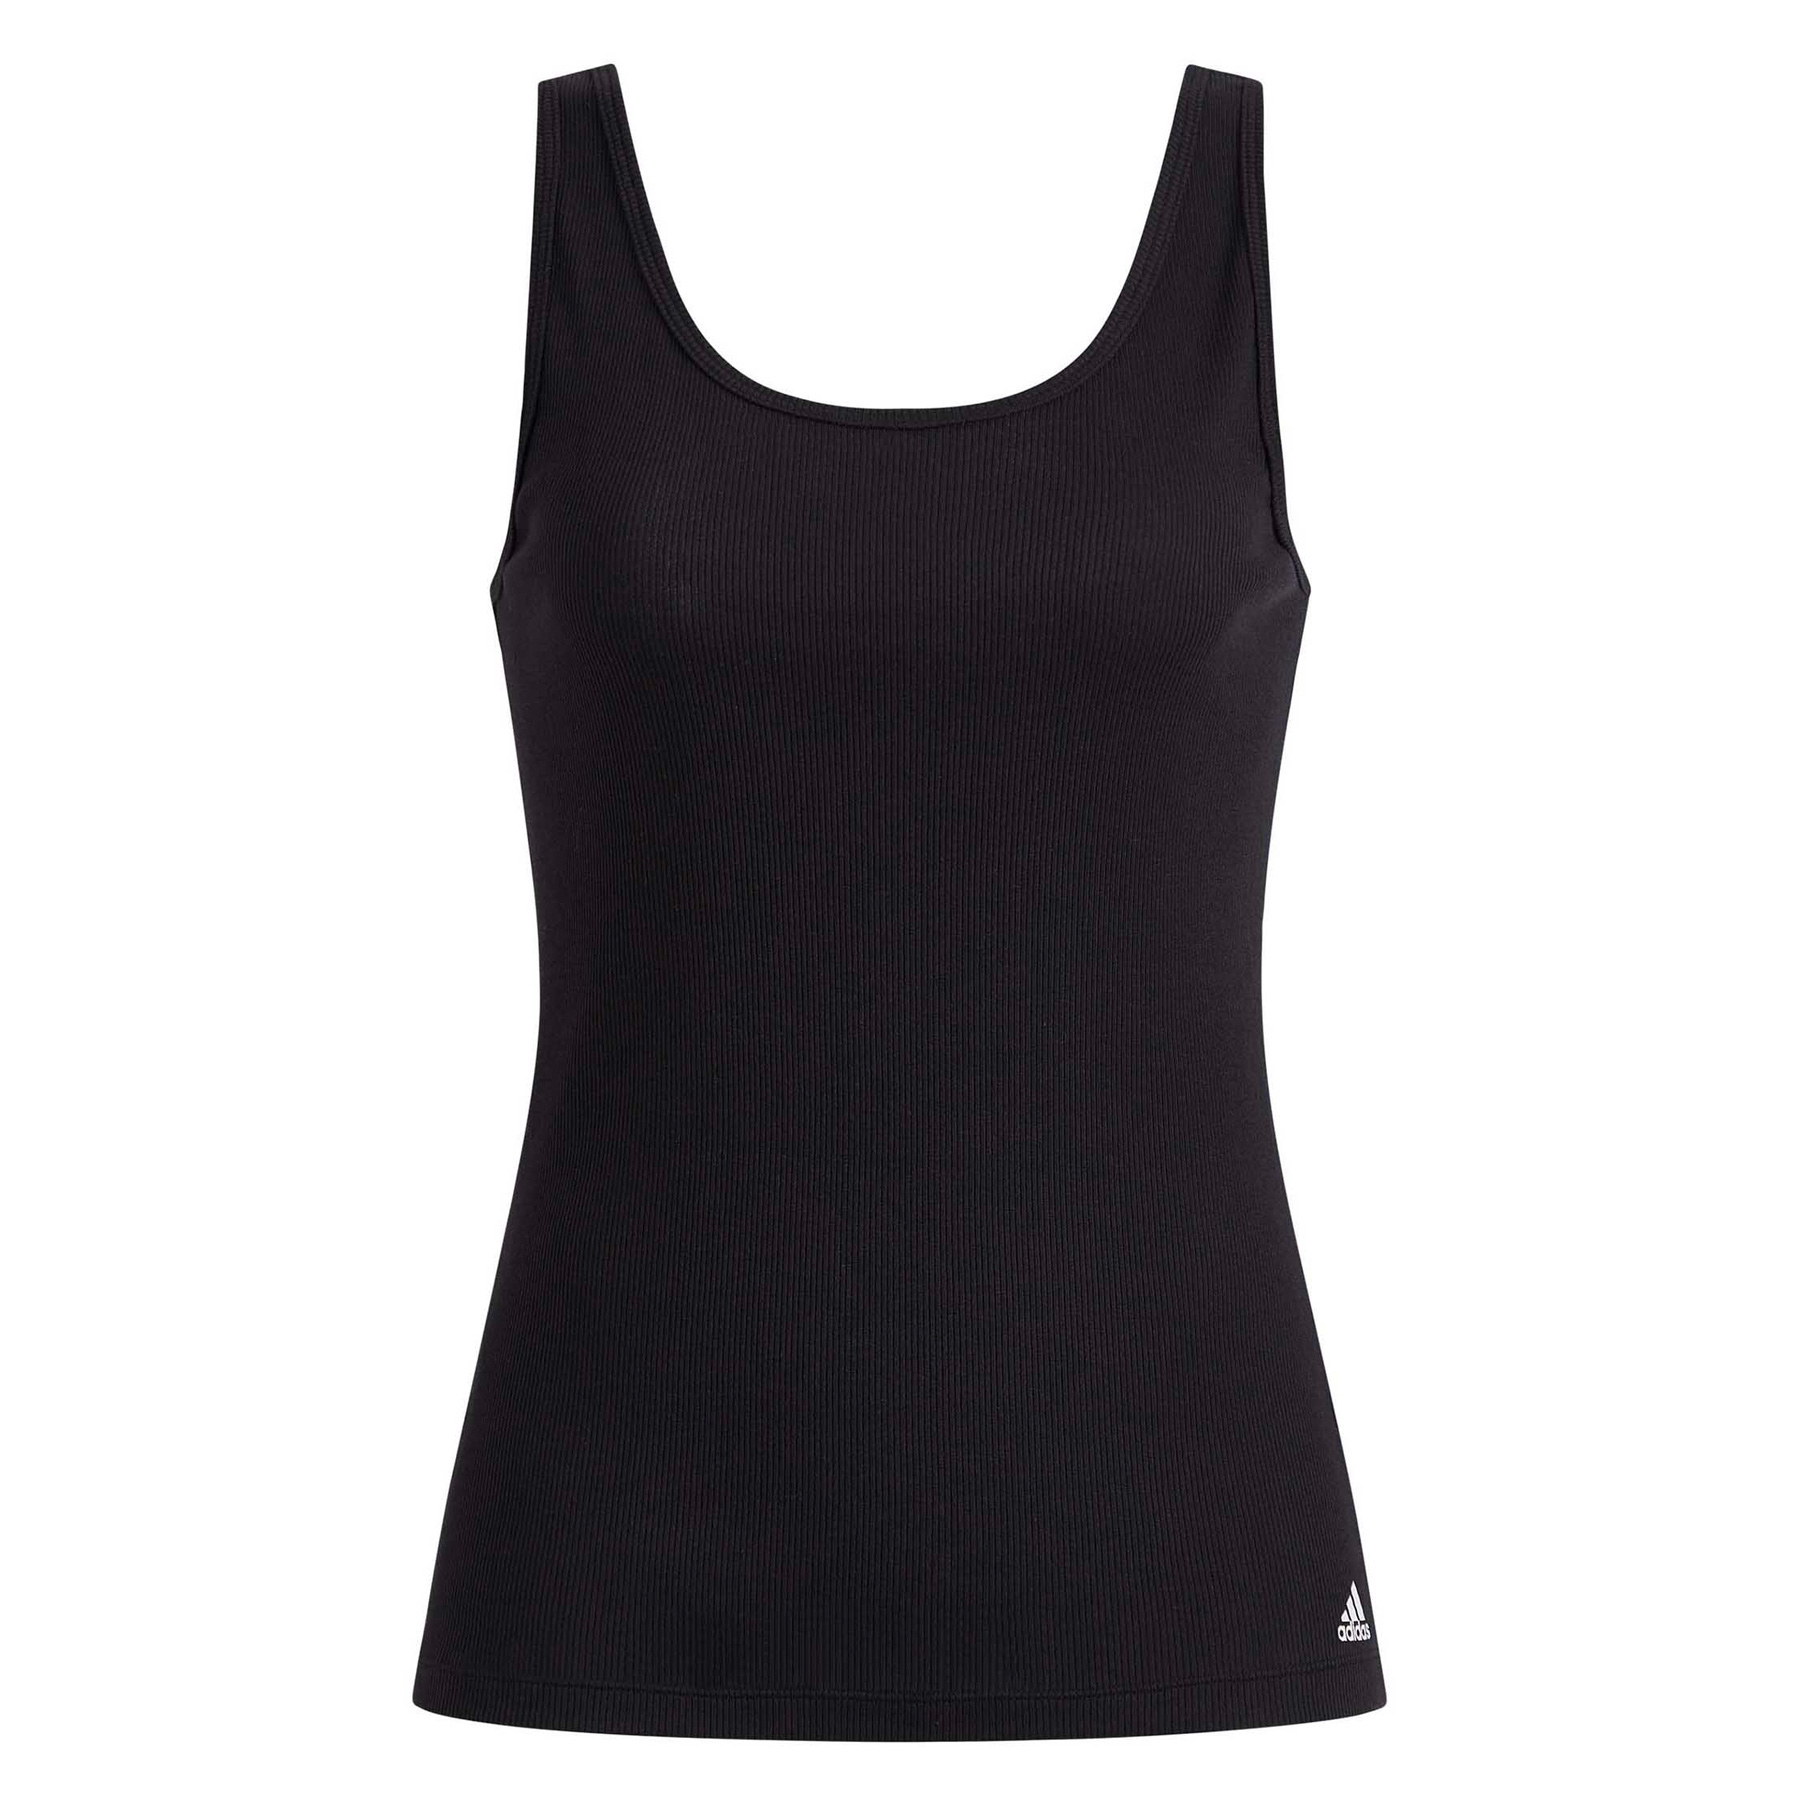 Productfoto van adidas Sports Underwear Rib 2x2 Cotton Dames Tank Top - 000-zwart